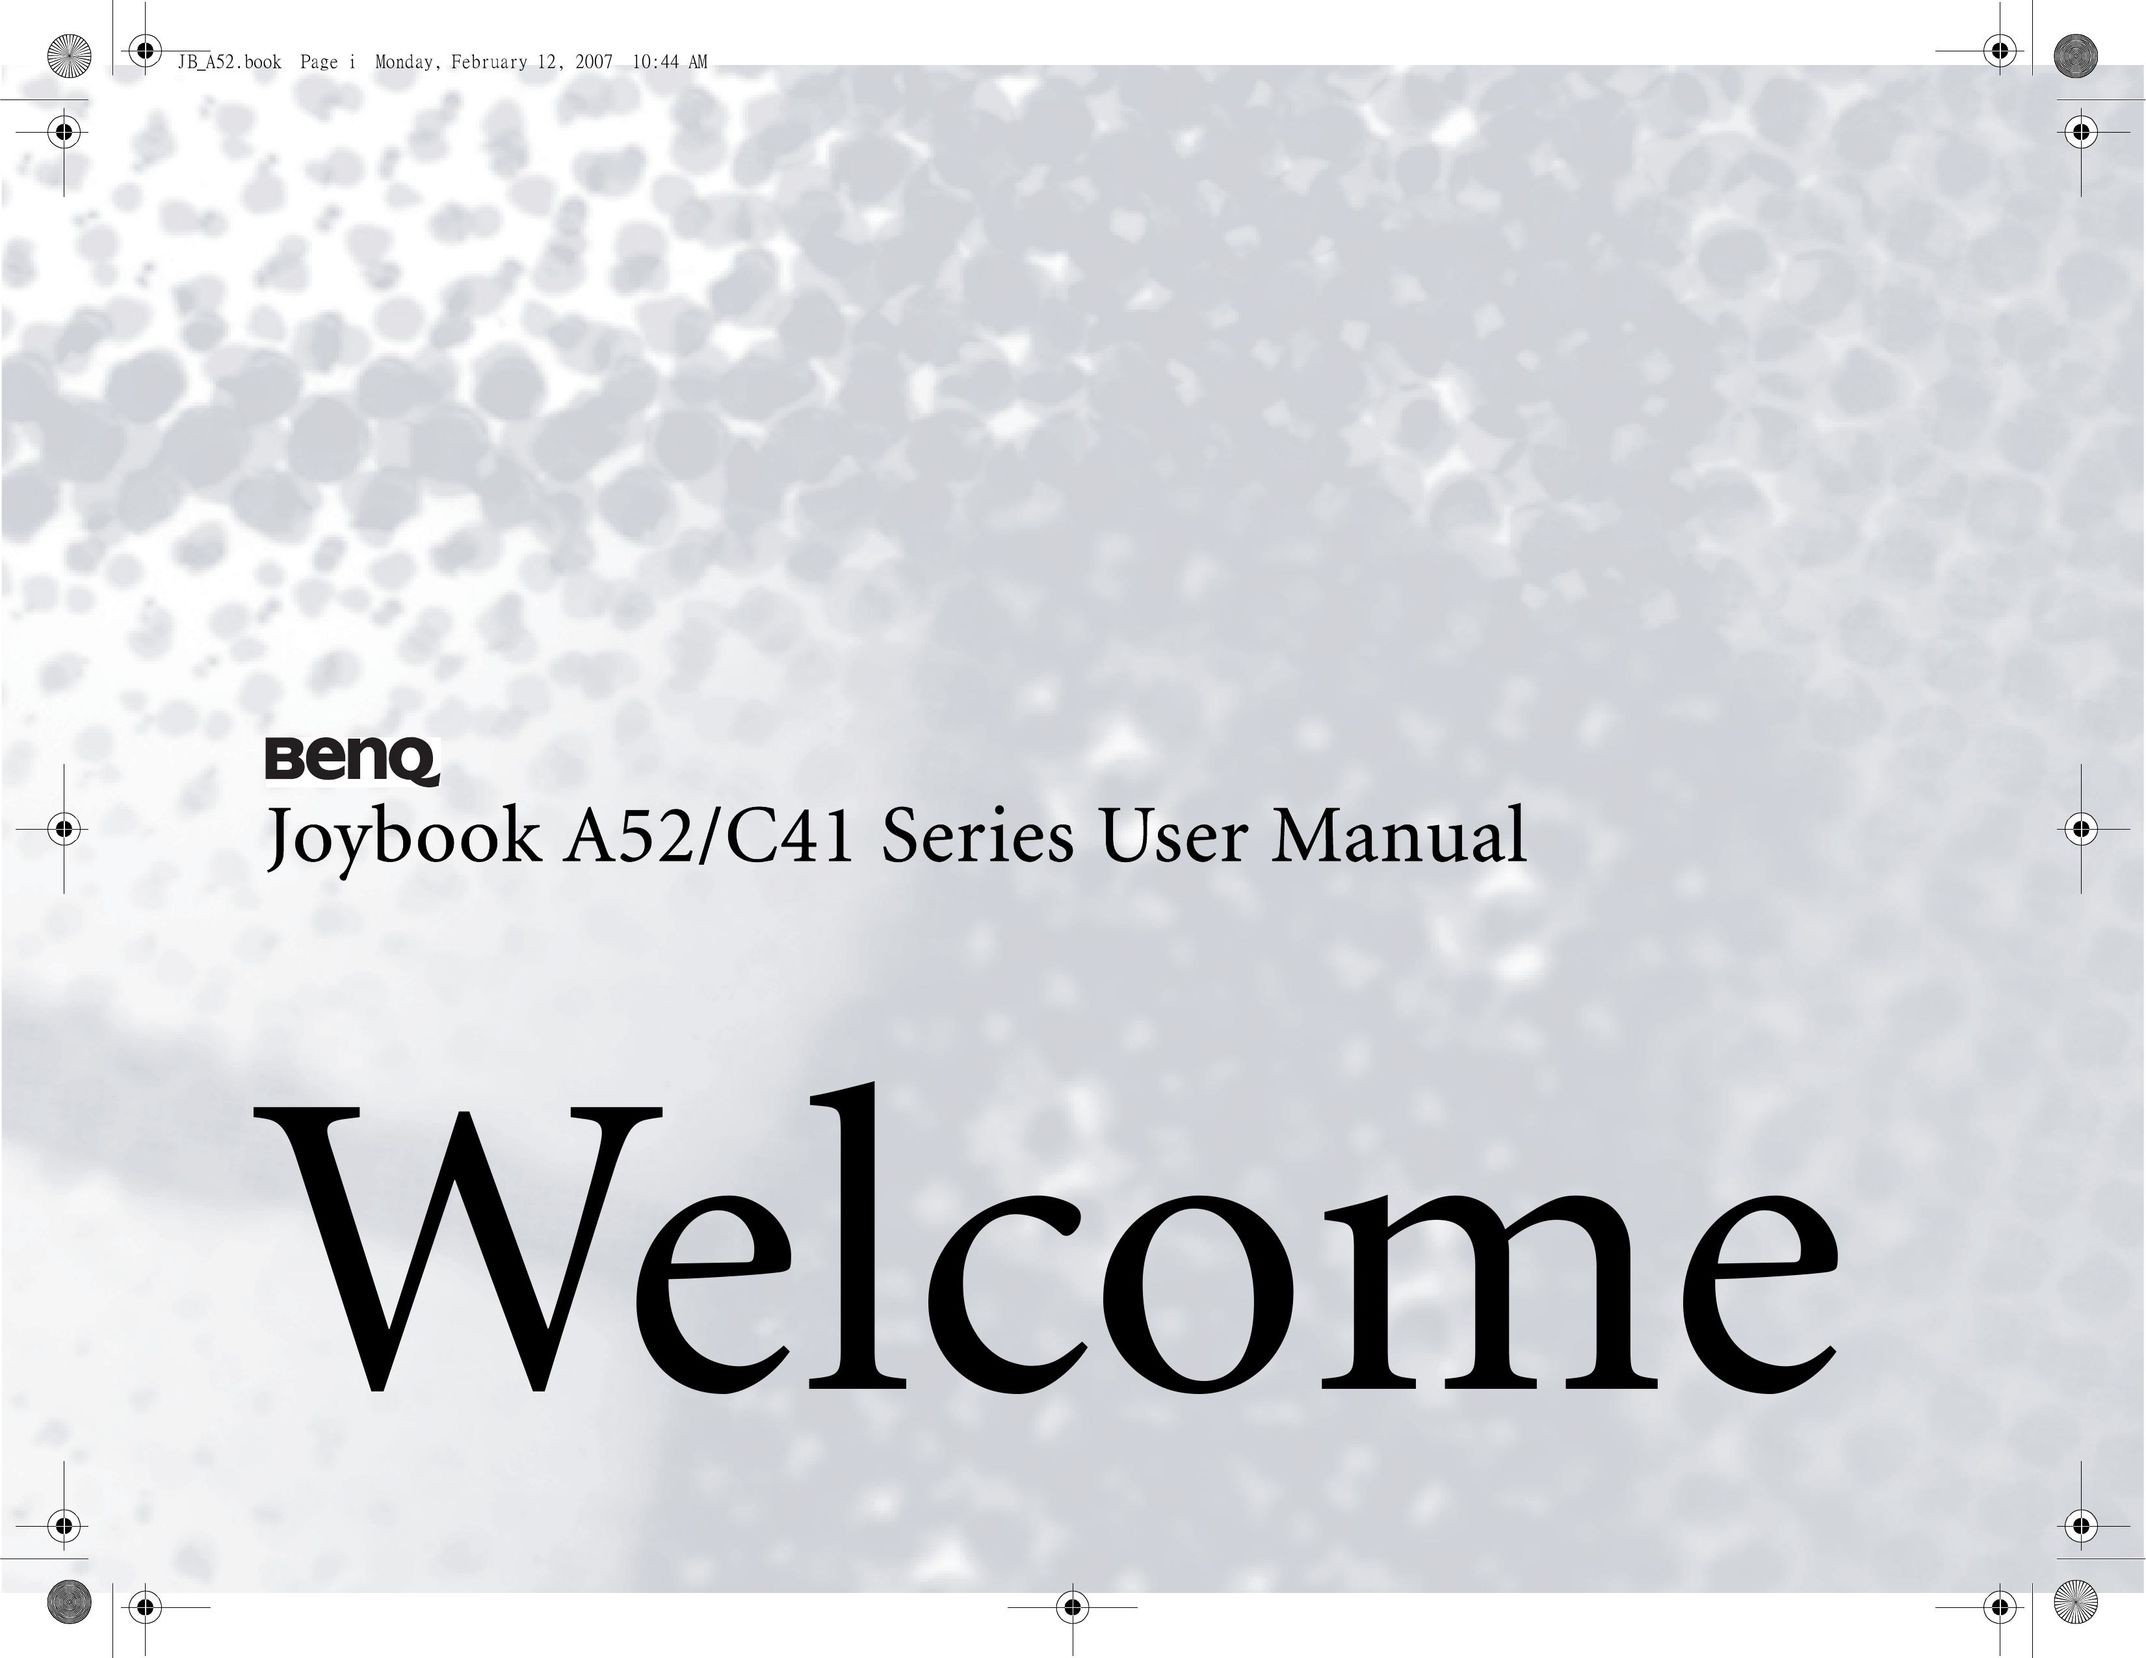 BenQ C41 Personal Computer User Manual